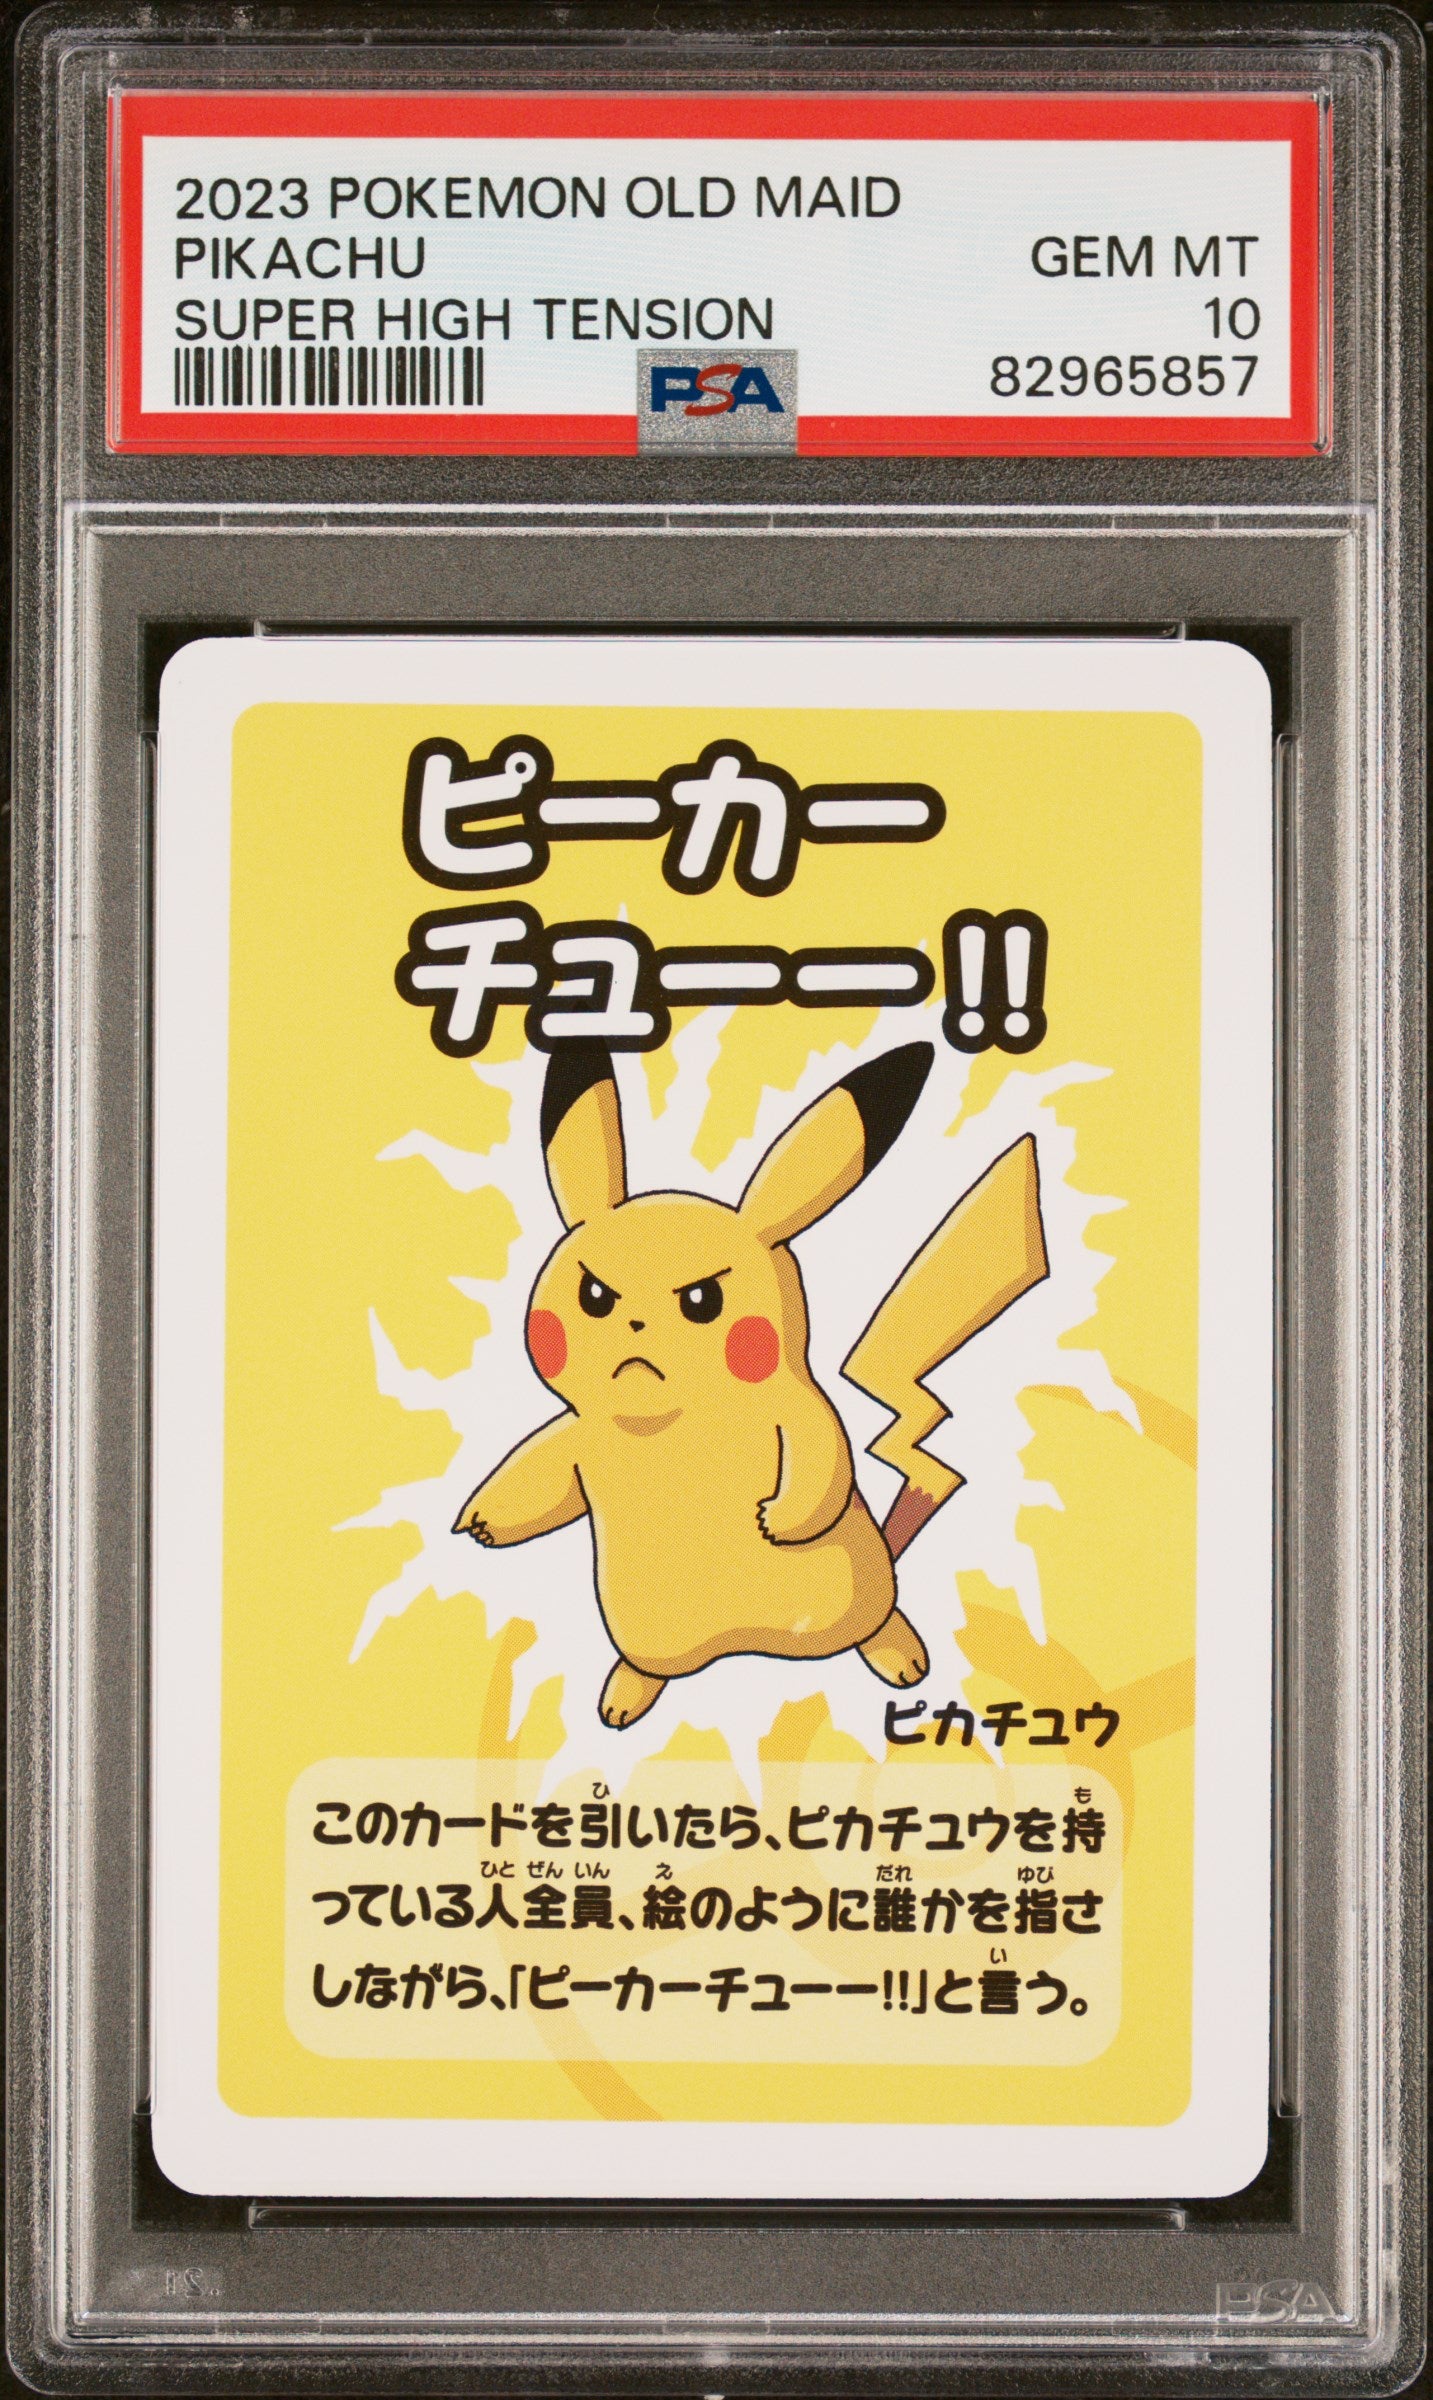 PSA 10 - Pikachu Old Maid Super High Tension - Pokemon